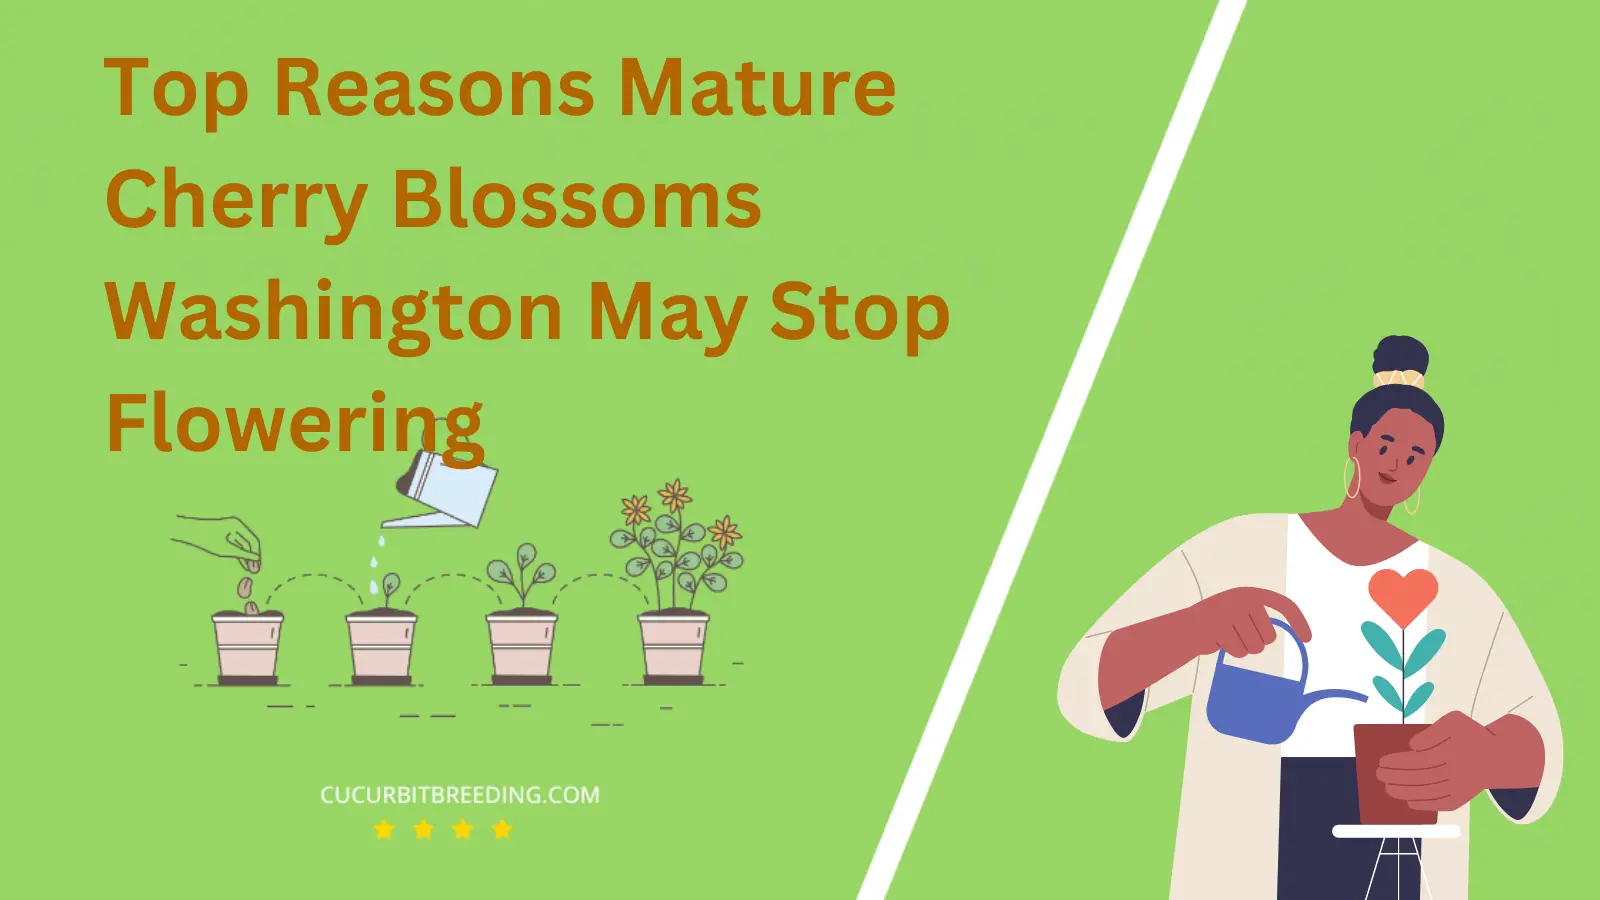 Top Reasons Mature Cherry Blossoms Washington May Stop Flowering